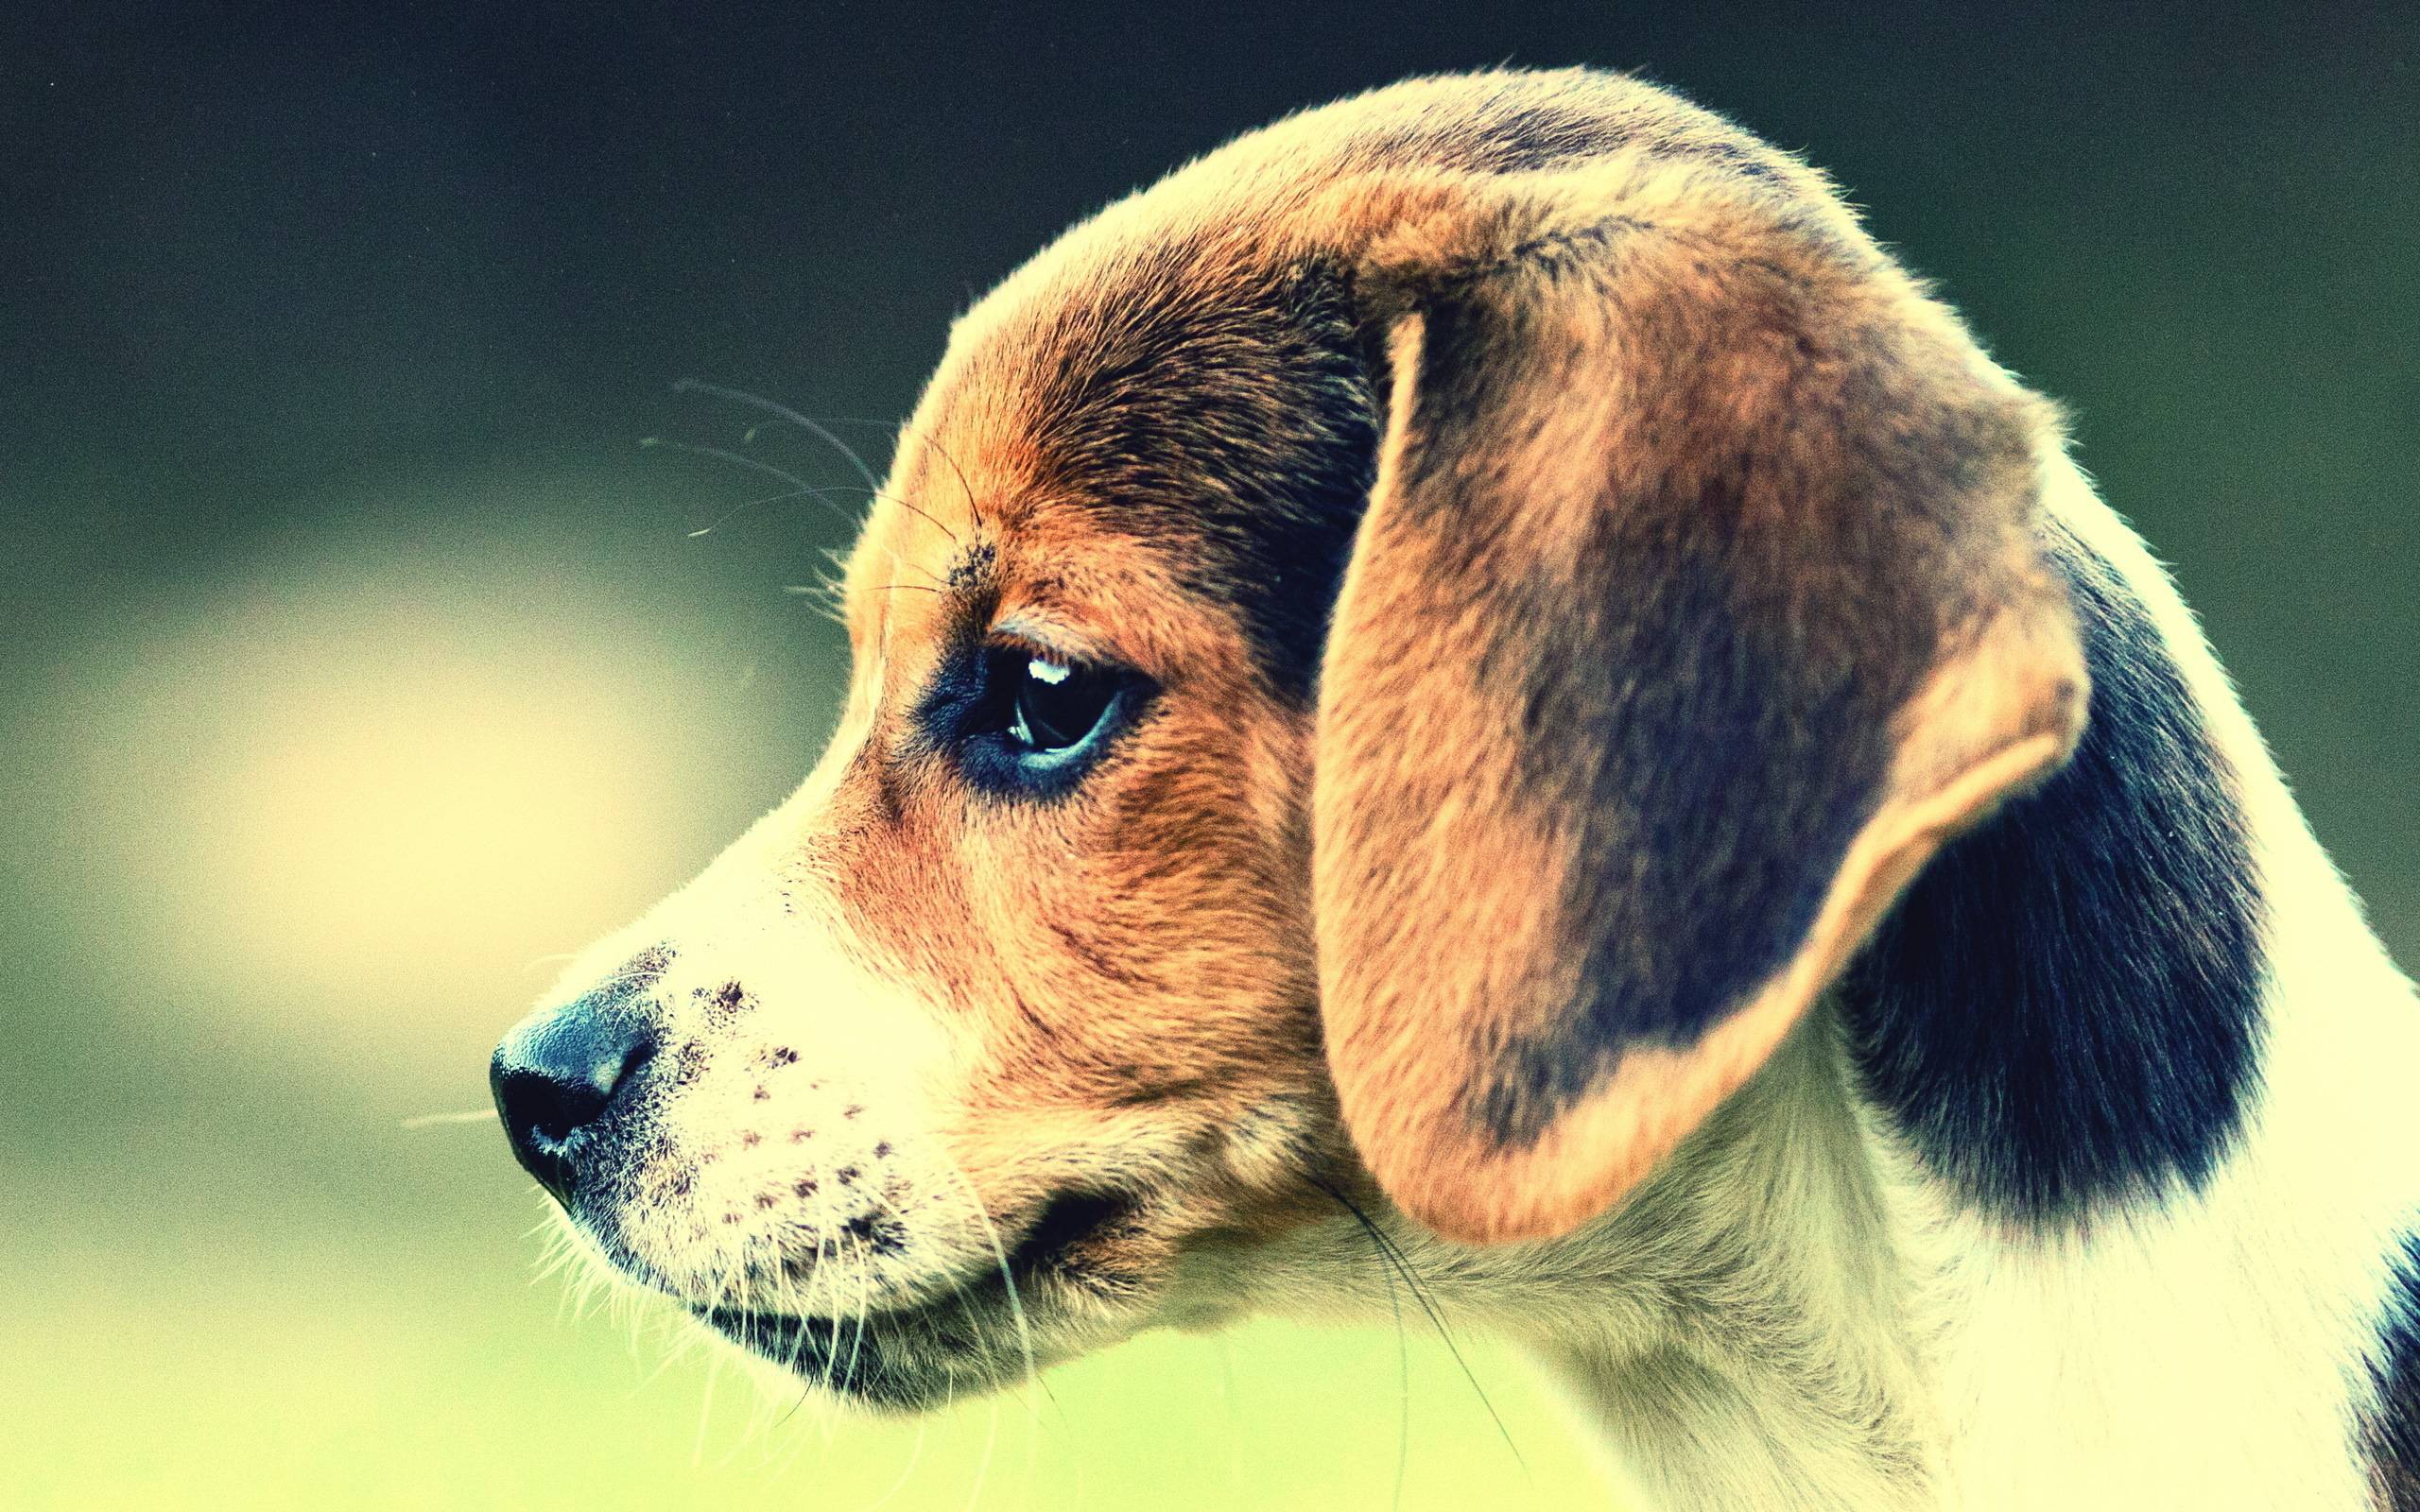 Dog Beagle wallpapers and image